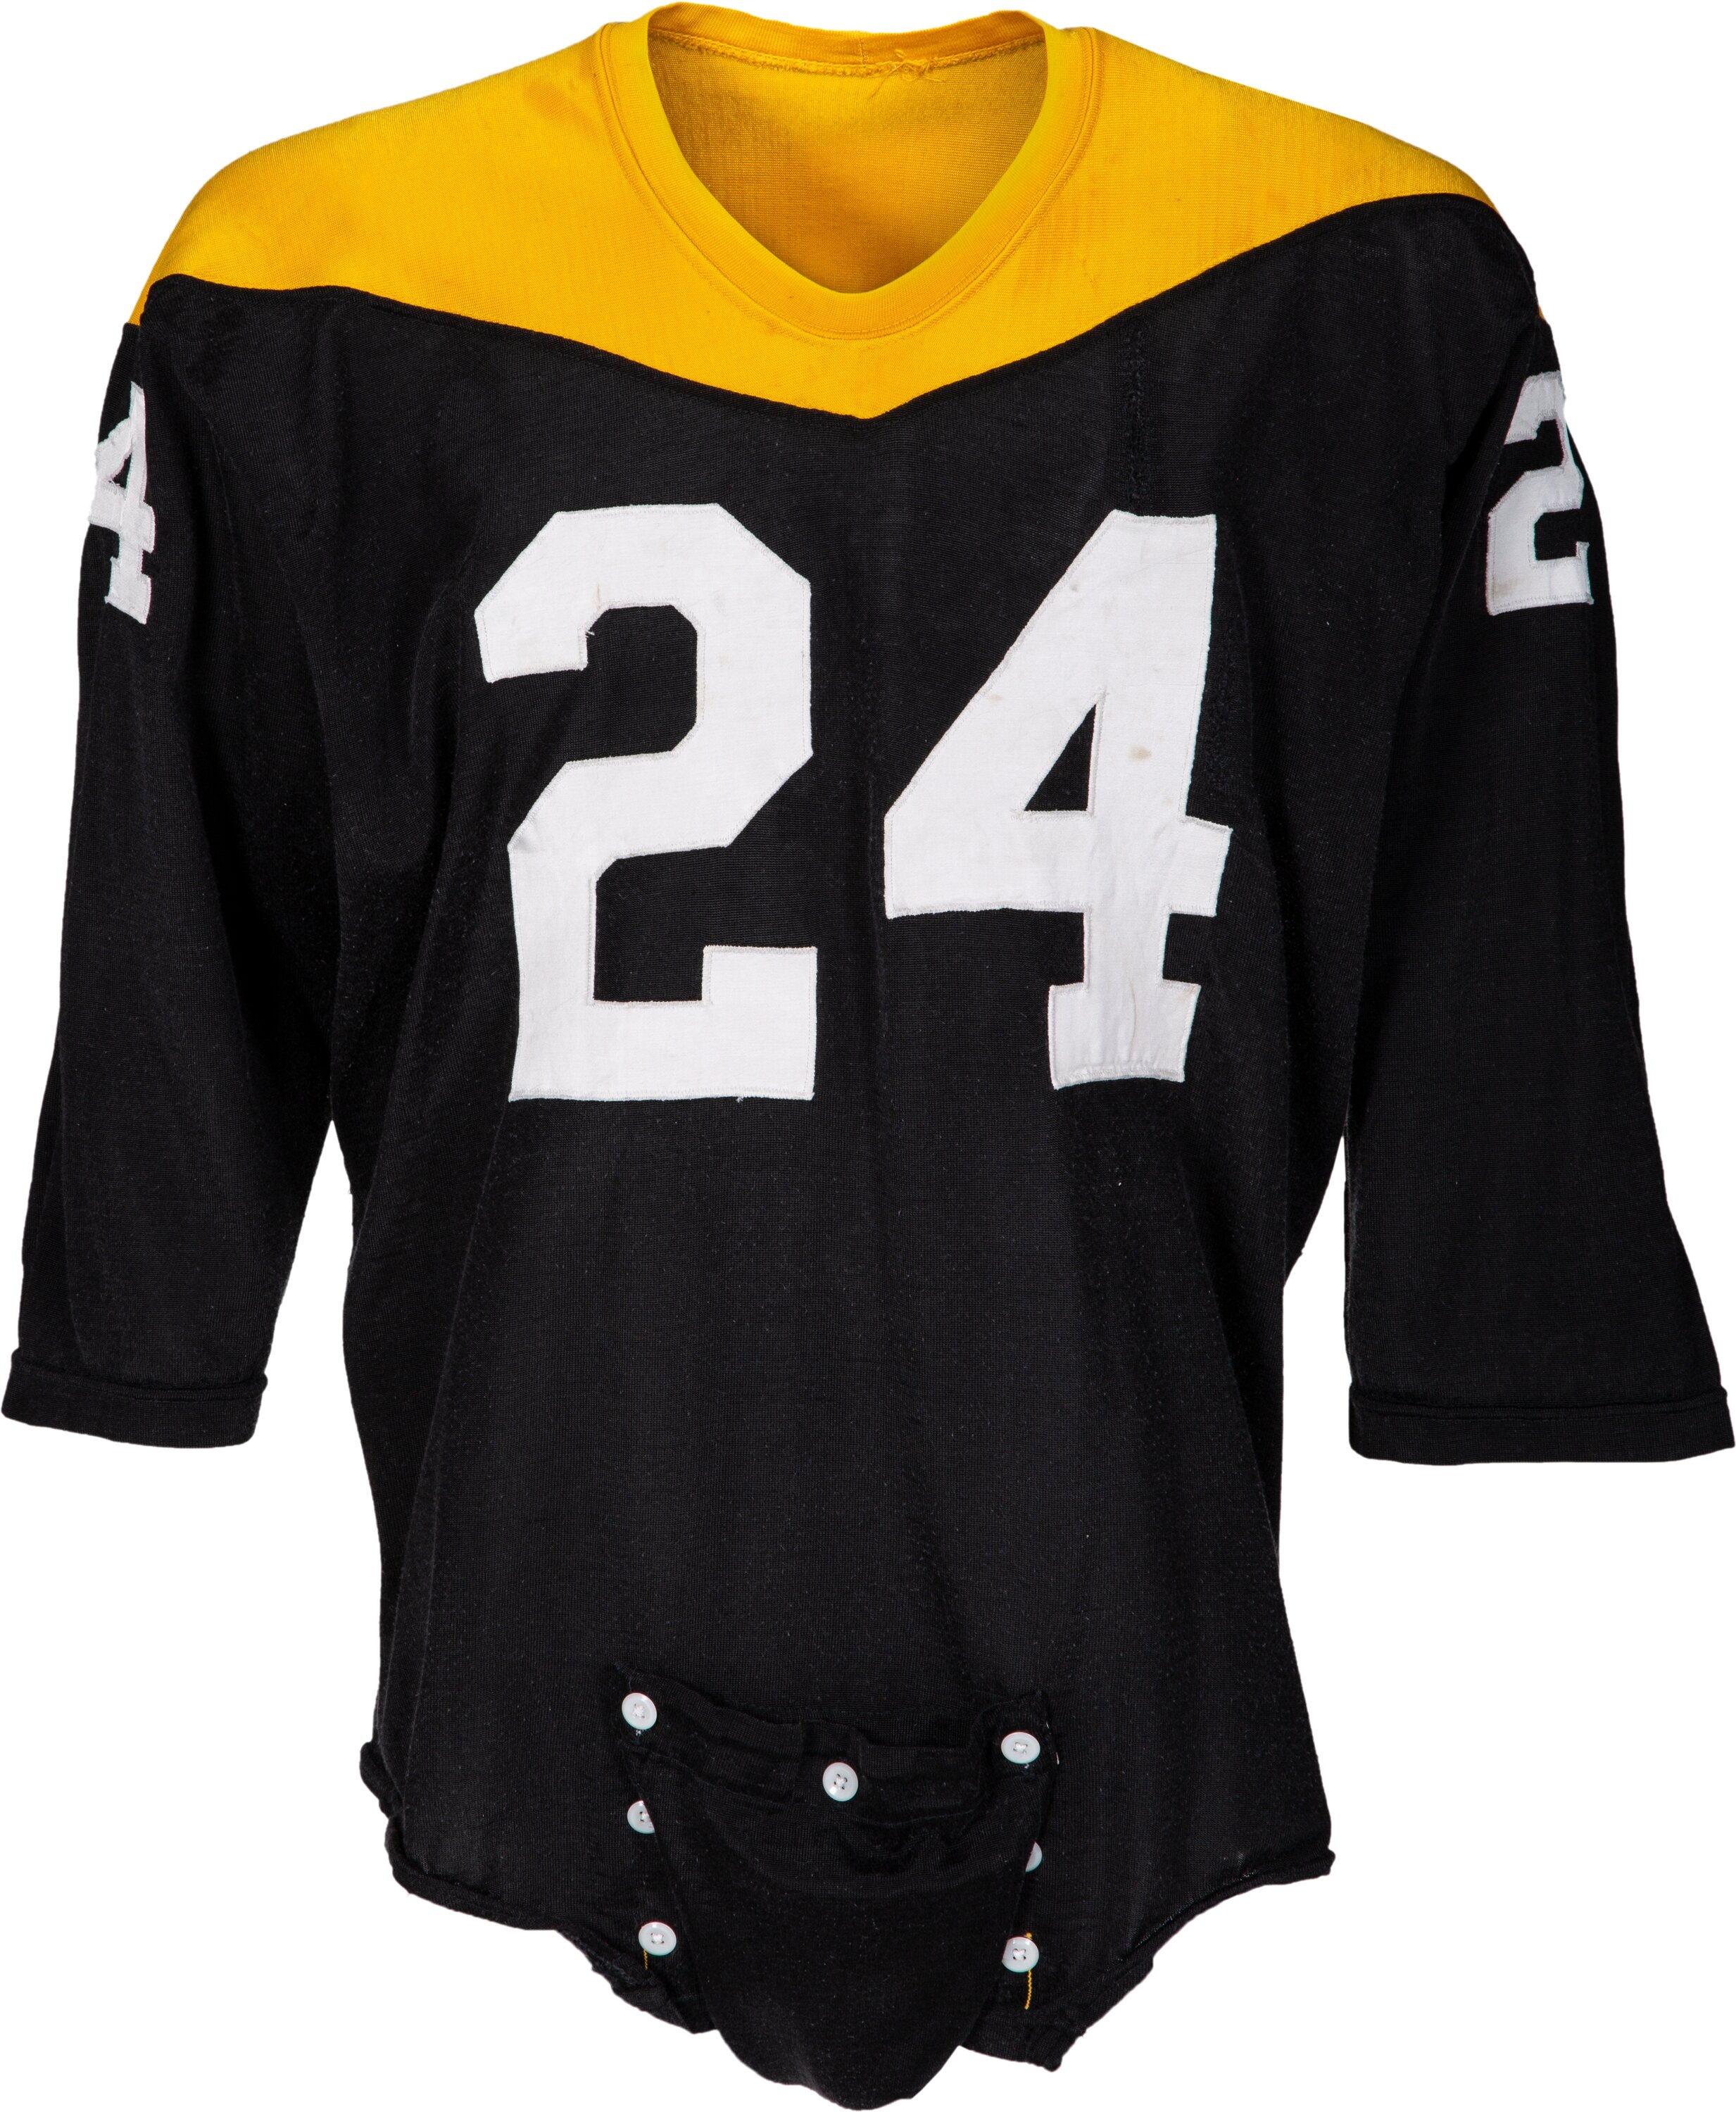 1967-68 Pittsburgh Steelers Game Worn Batman Style Jersey